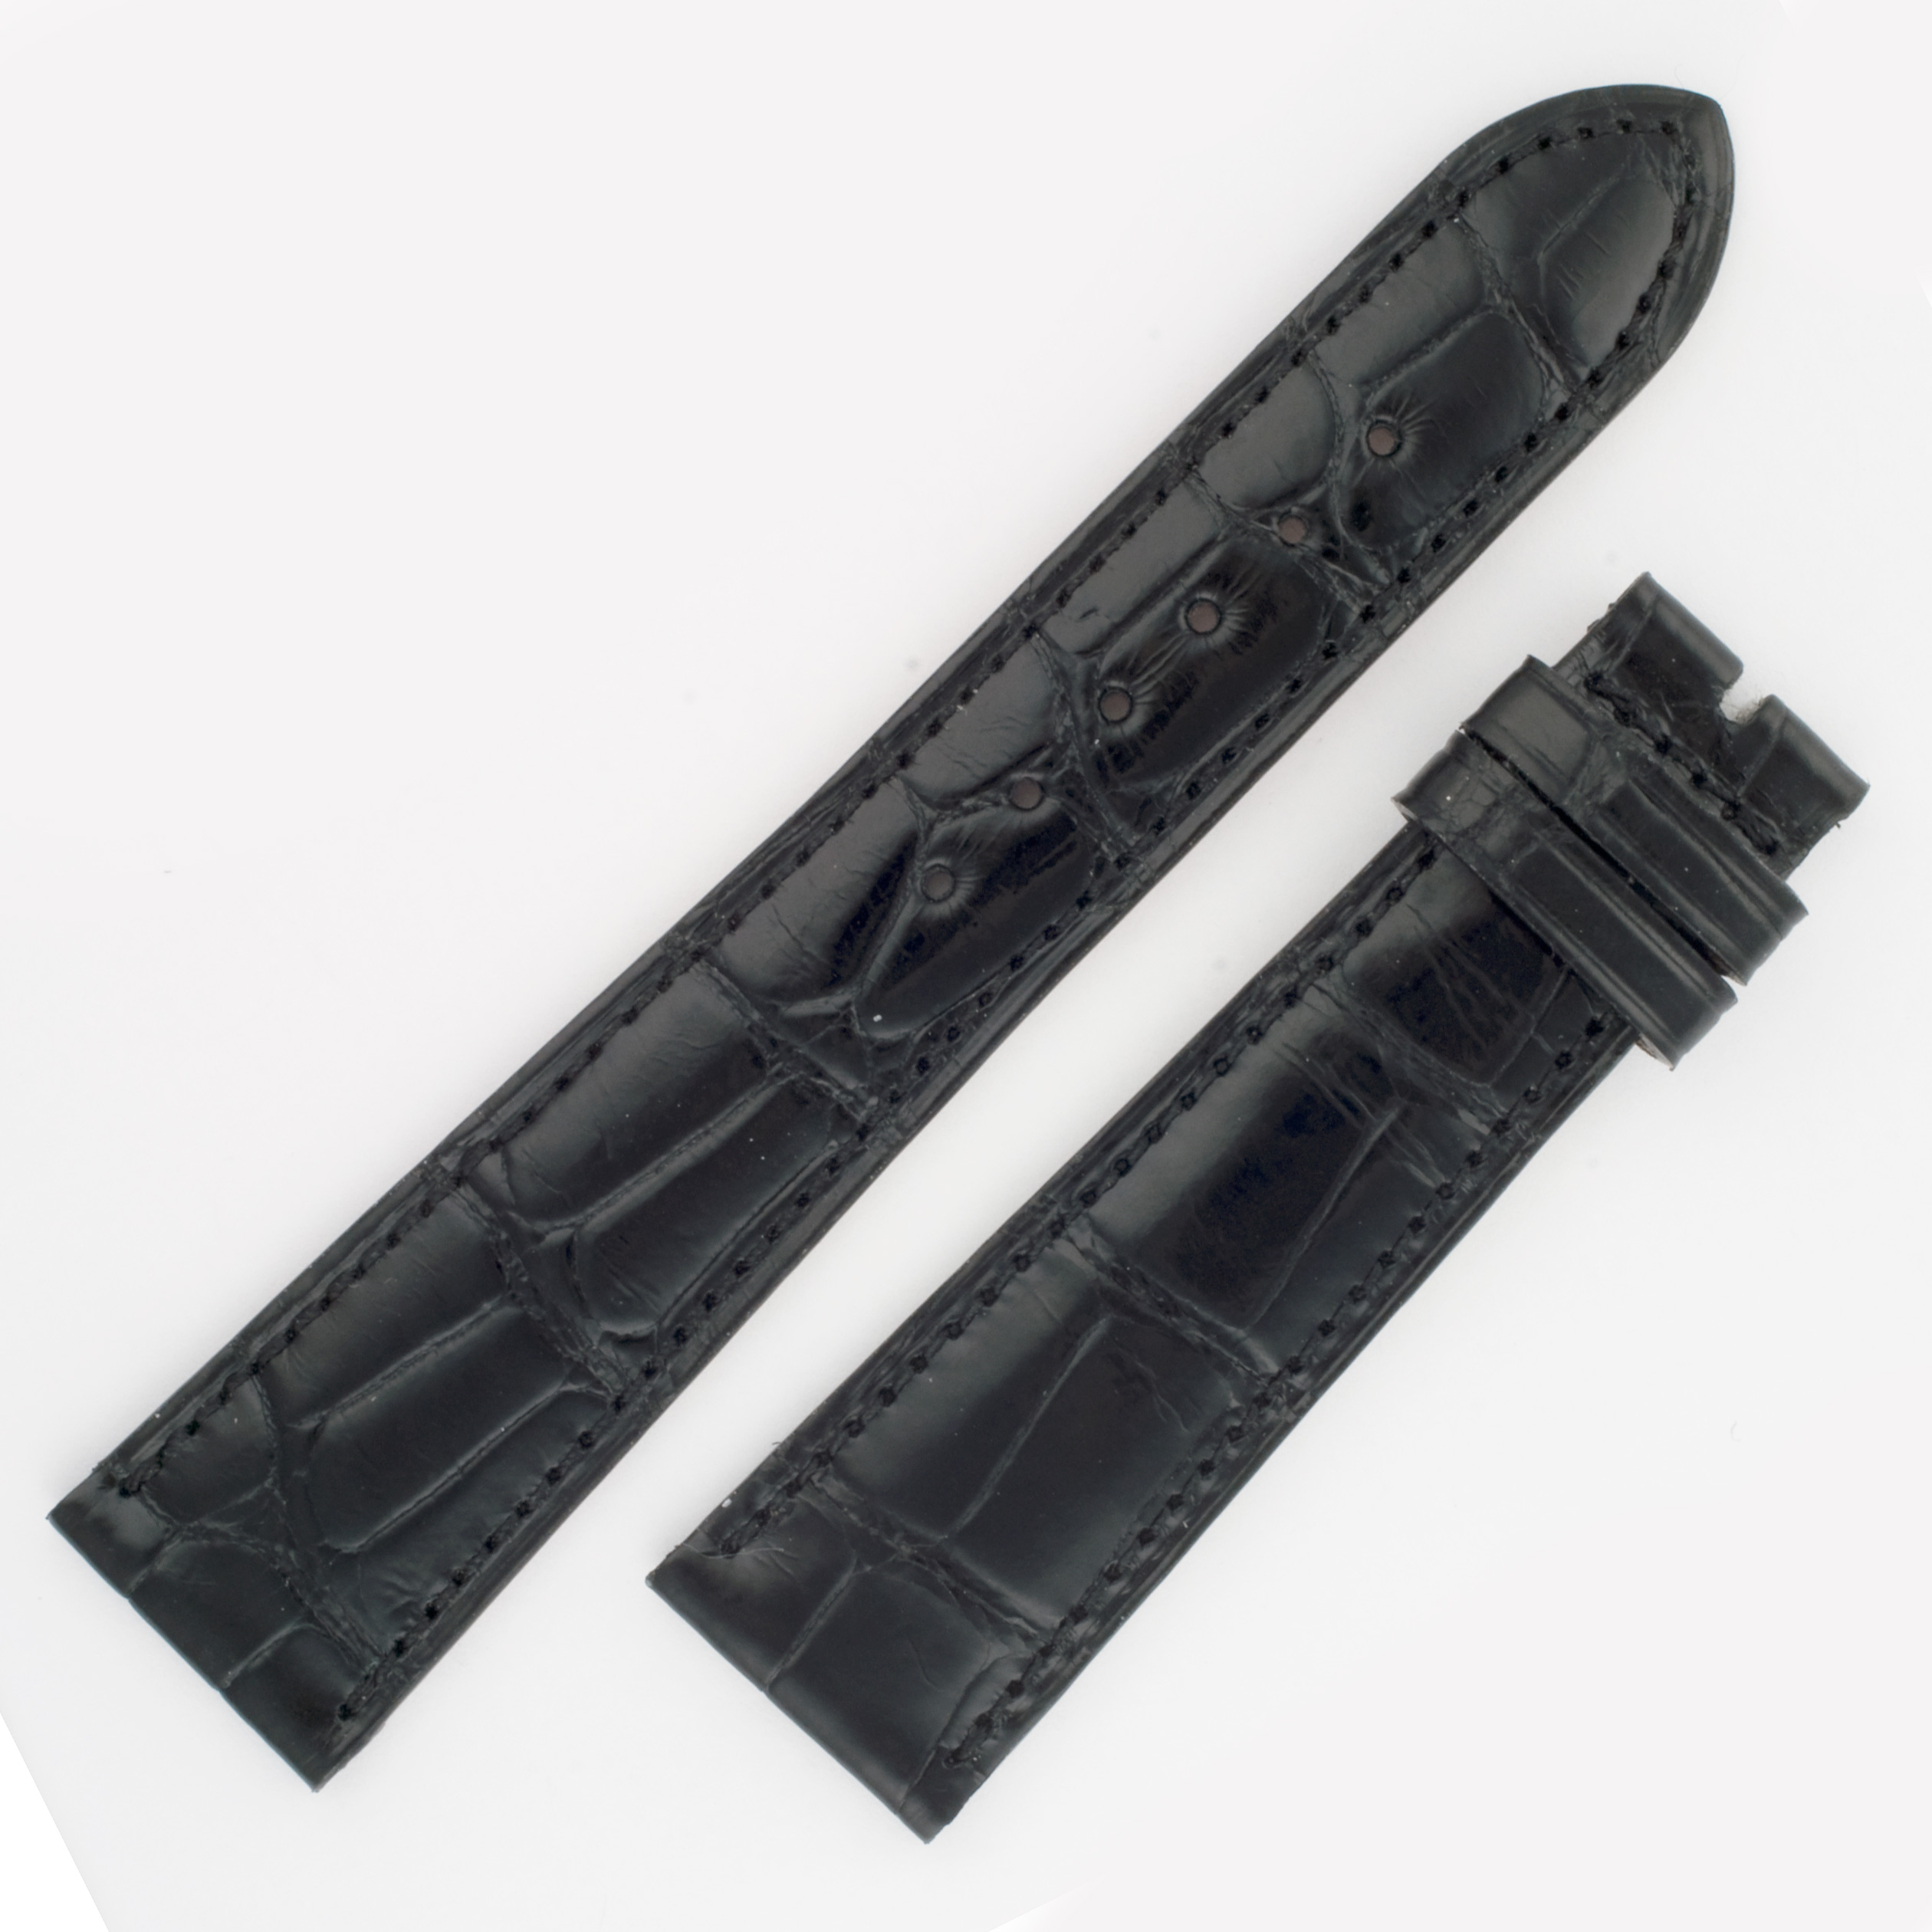 Patek Philippe black alligator strap (20mmx16mm) image 1